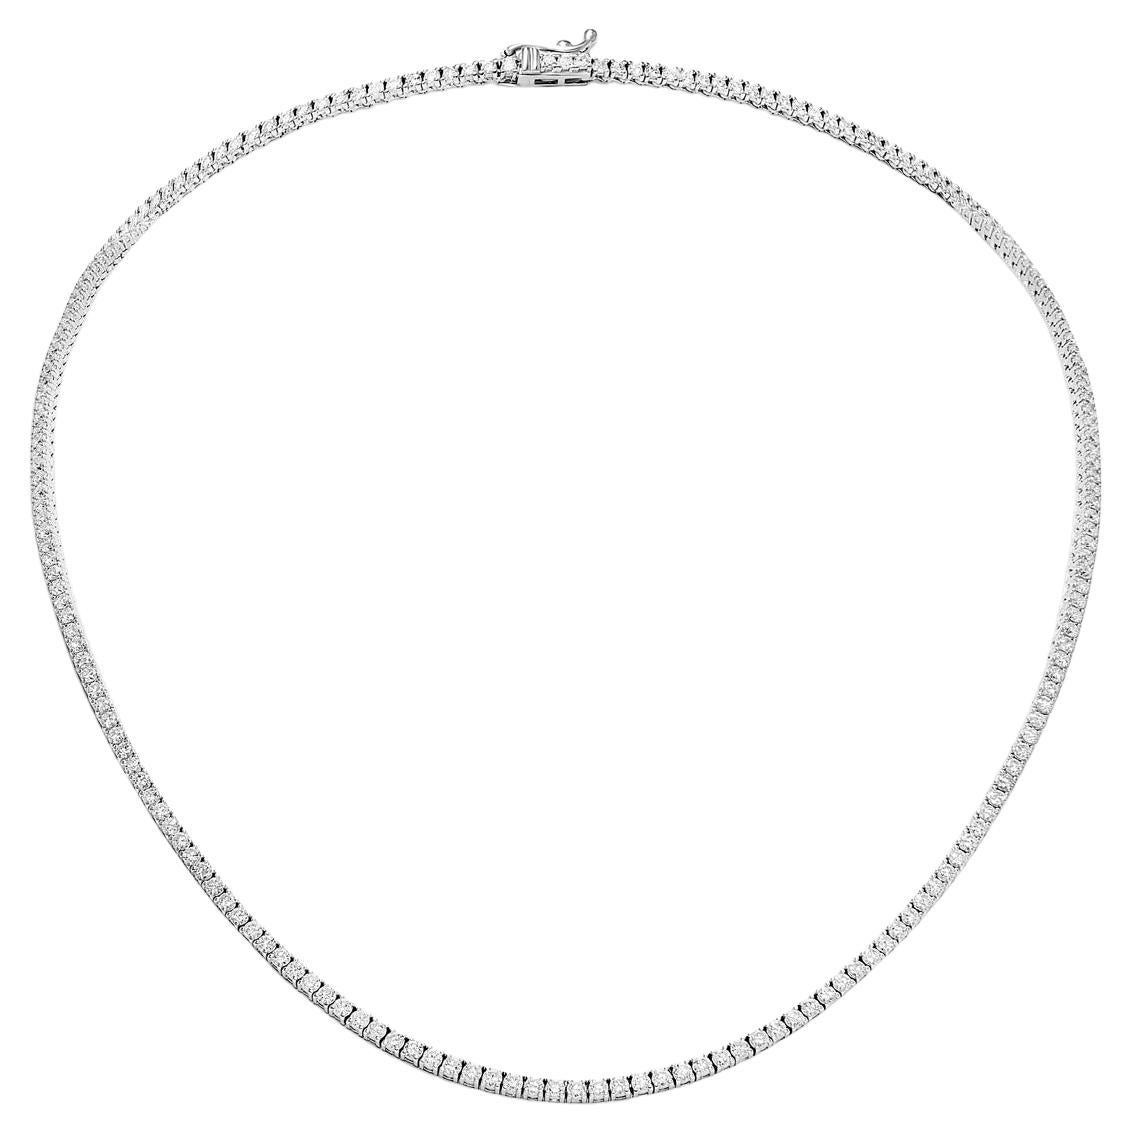 7 Carat Round Brilliant Diamond Tennis Necklace Certified For Sale